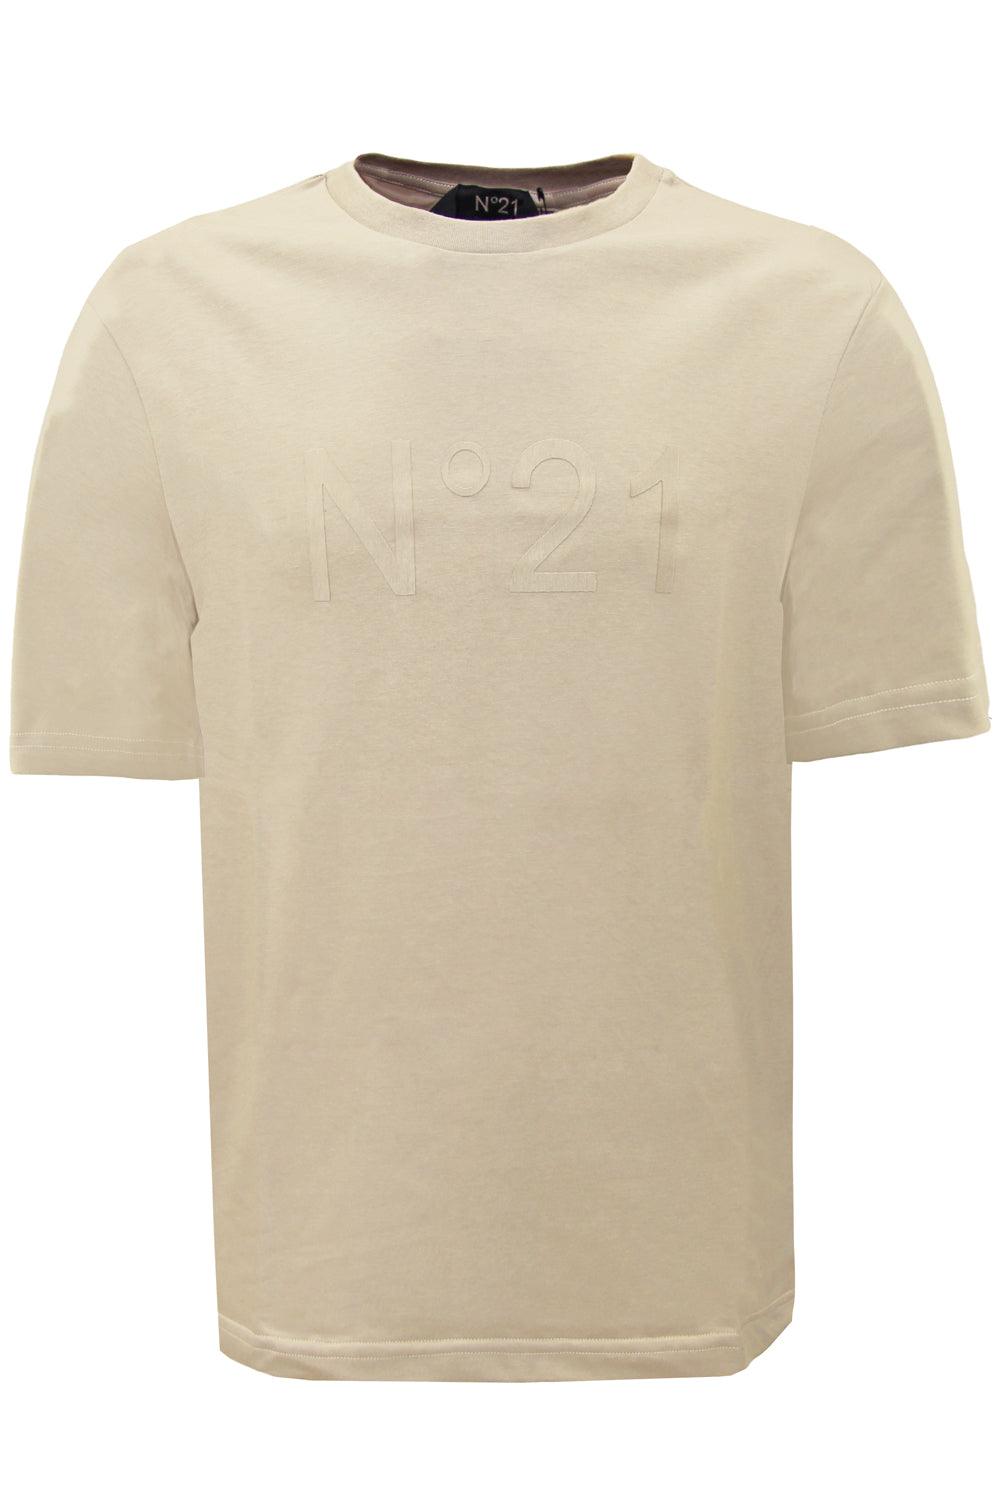 N21 T-shirt con applicazione